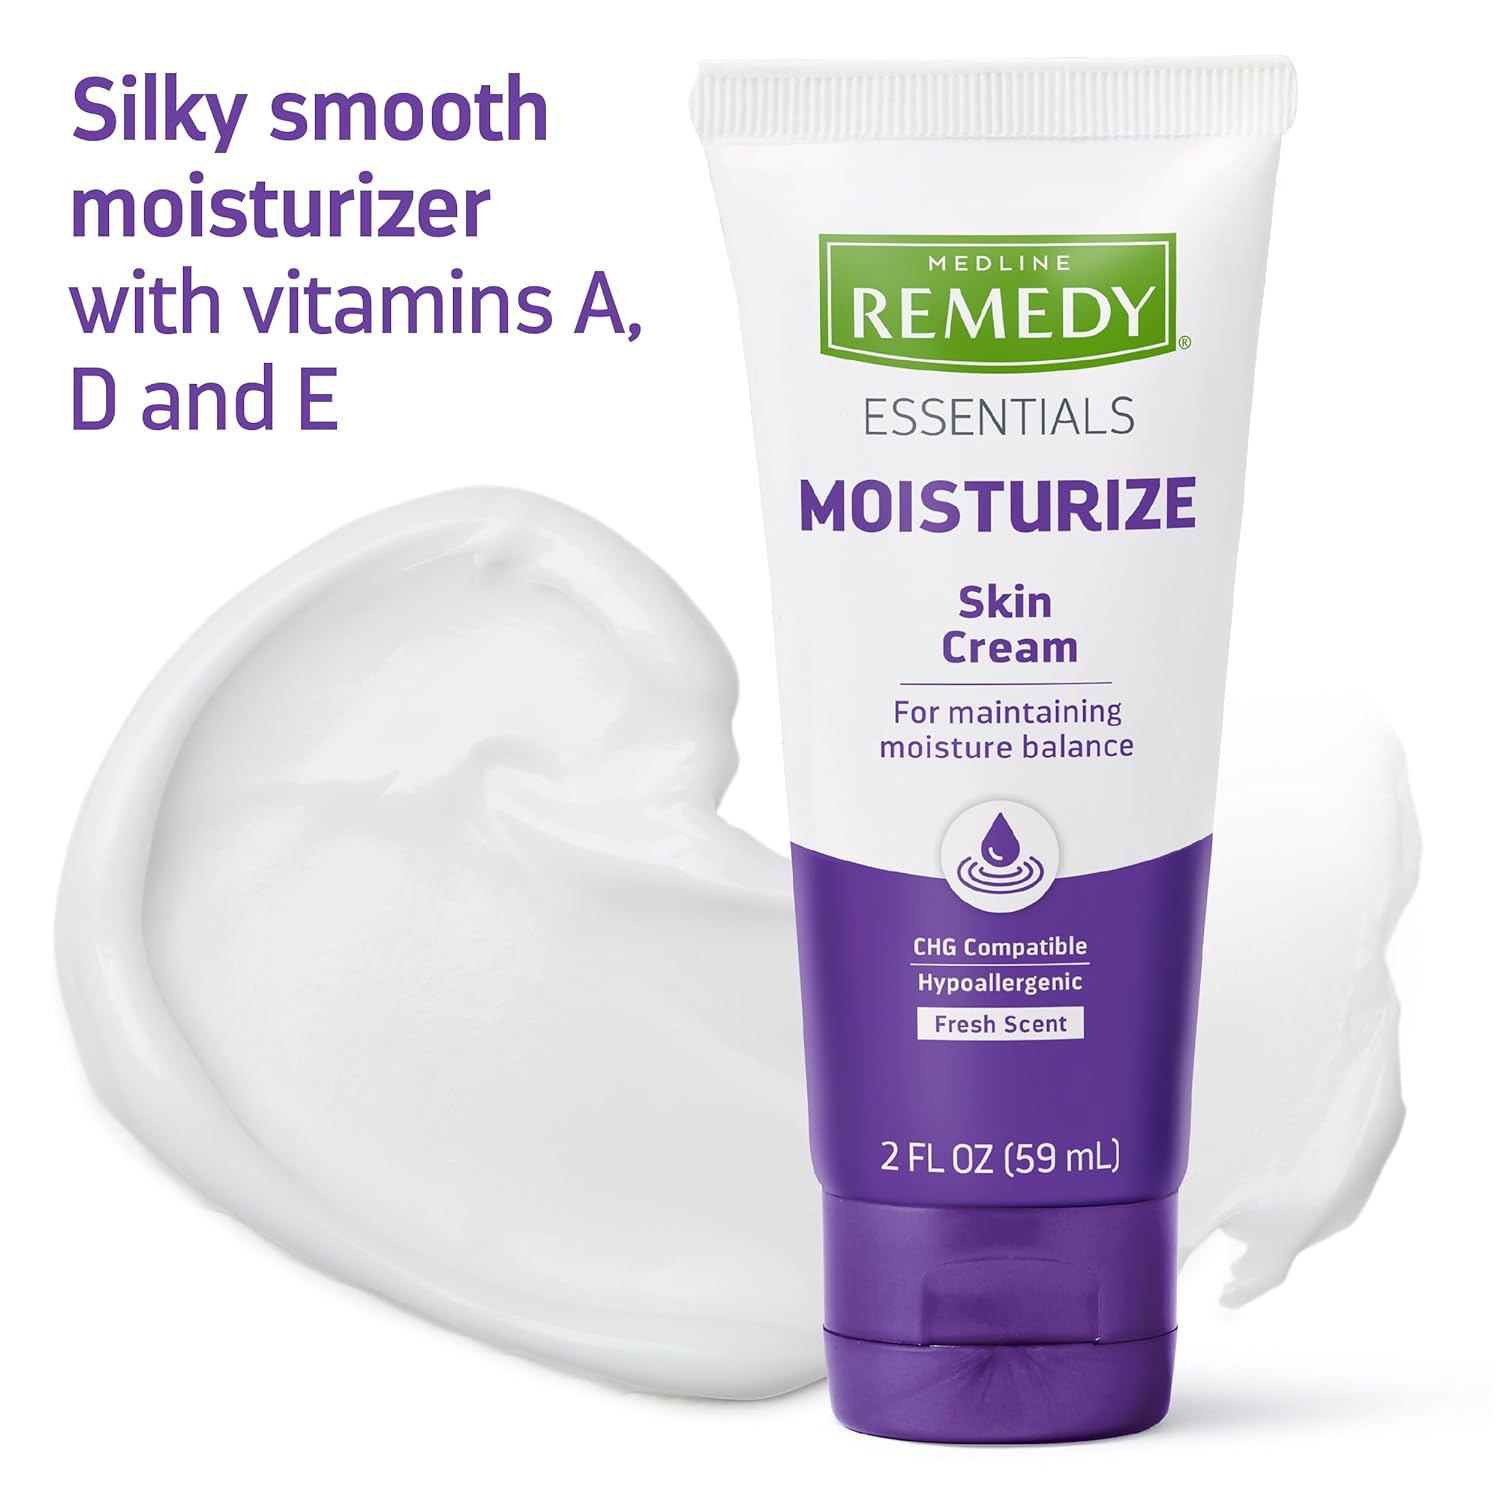 Medline Remedy Essentials Skin Cream (2 oz Tube), 12 Count, Fresh Scent, Moisturizer, Hydrating, Dry Skin Care, Aloe, Vitamins A, D & E, Dimethicone, Hypoallergenic, Body Lotion, Men, Women, Elderly